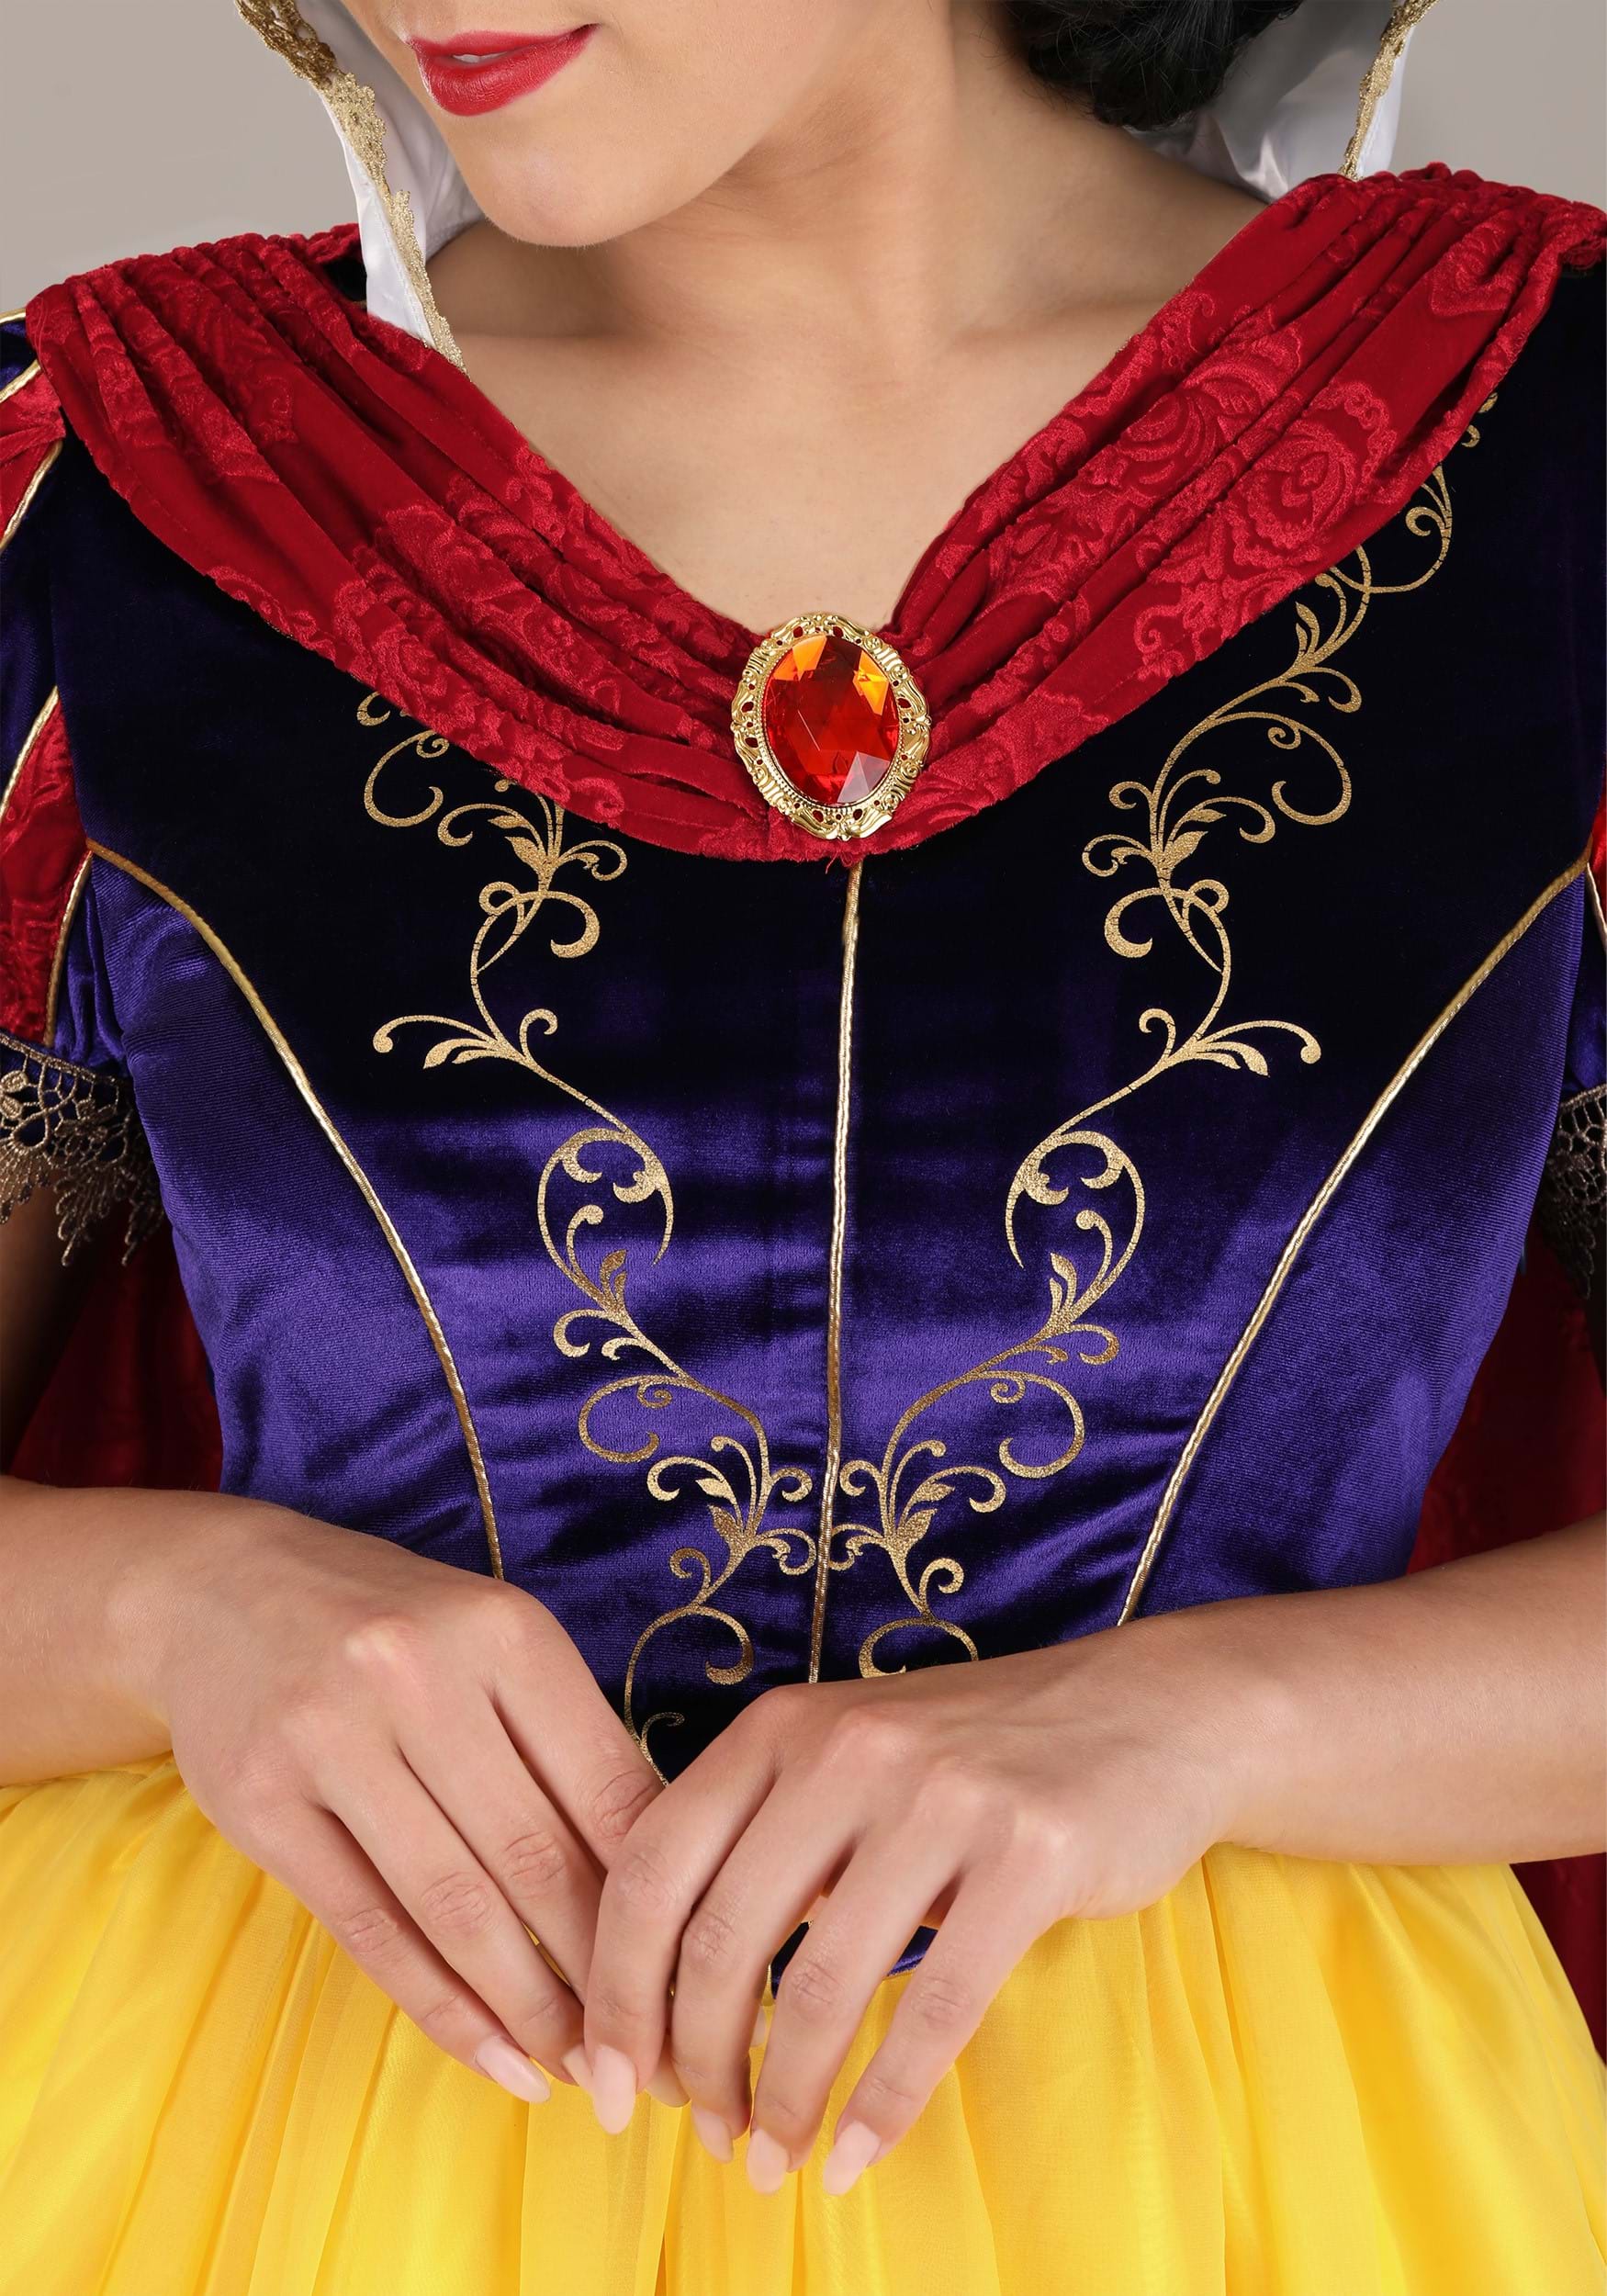 Plus Size Premium Snow White Costume for Women